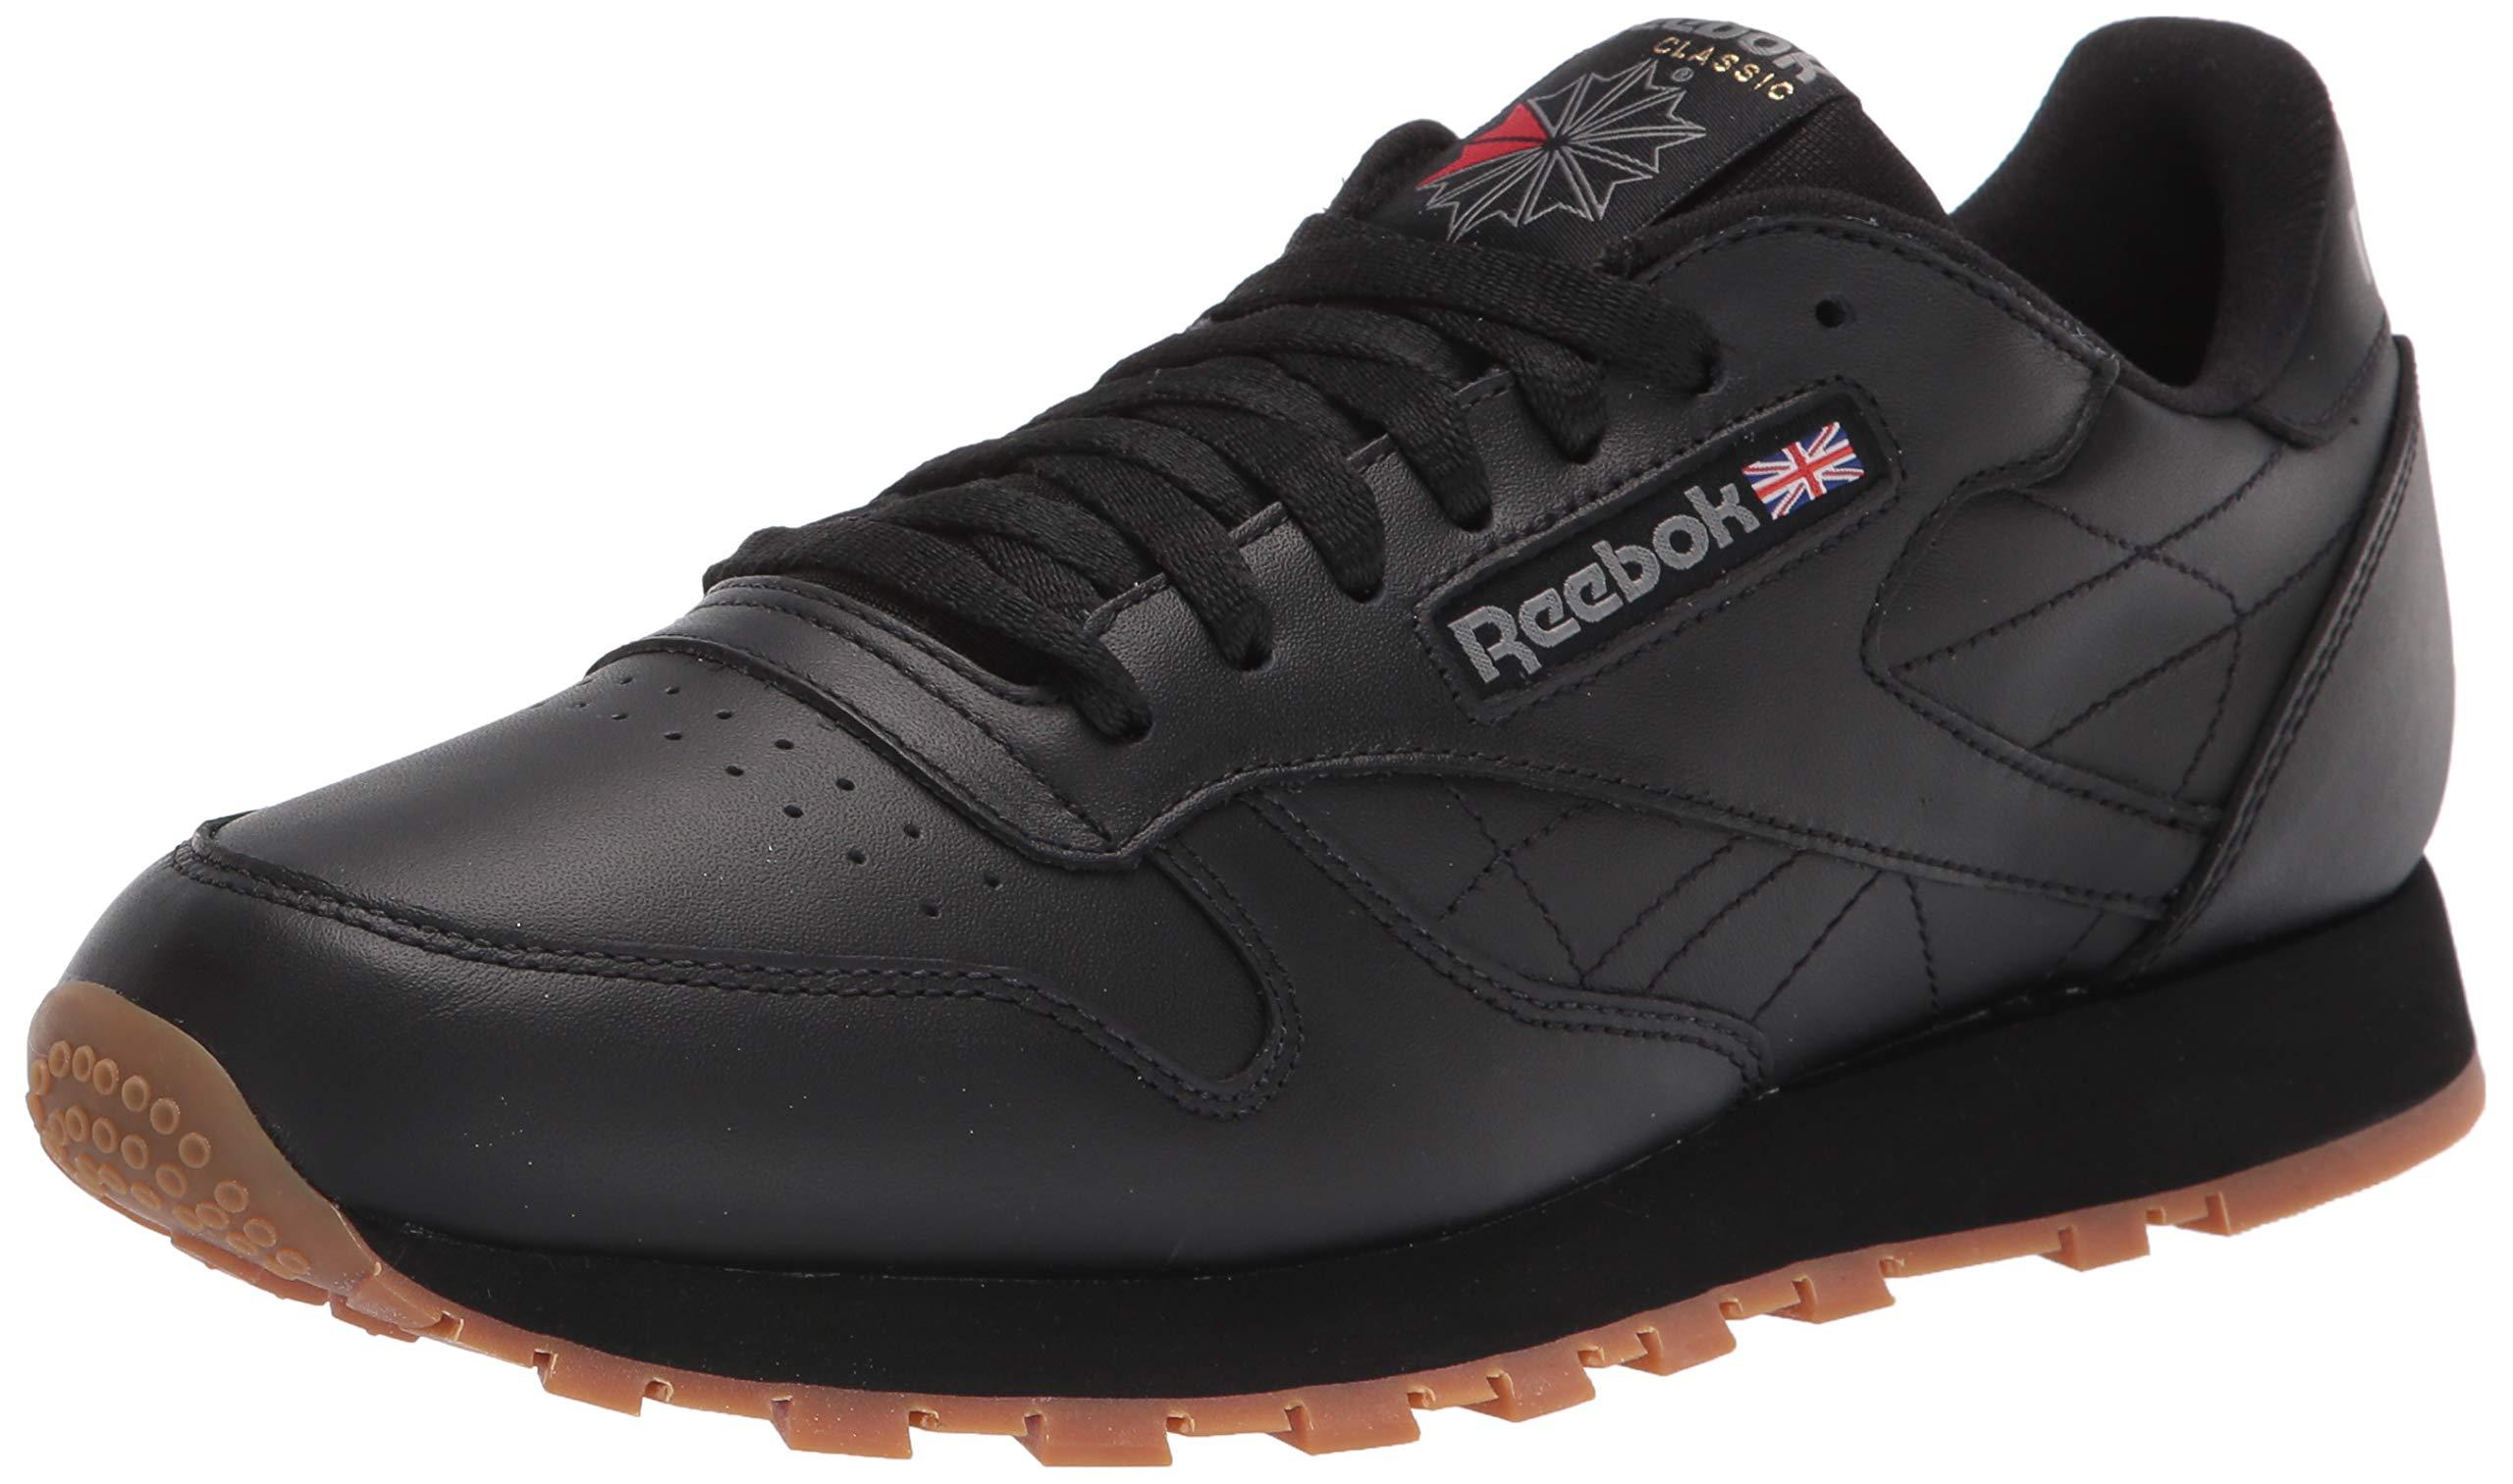 Reebok Classic Leather Fashion Sneaker in Black for Men - Lyst